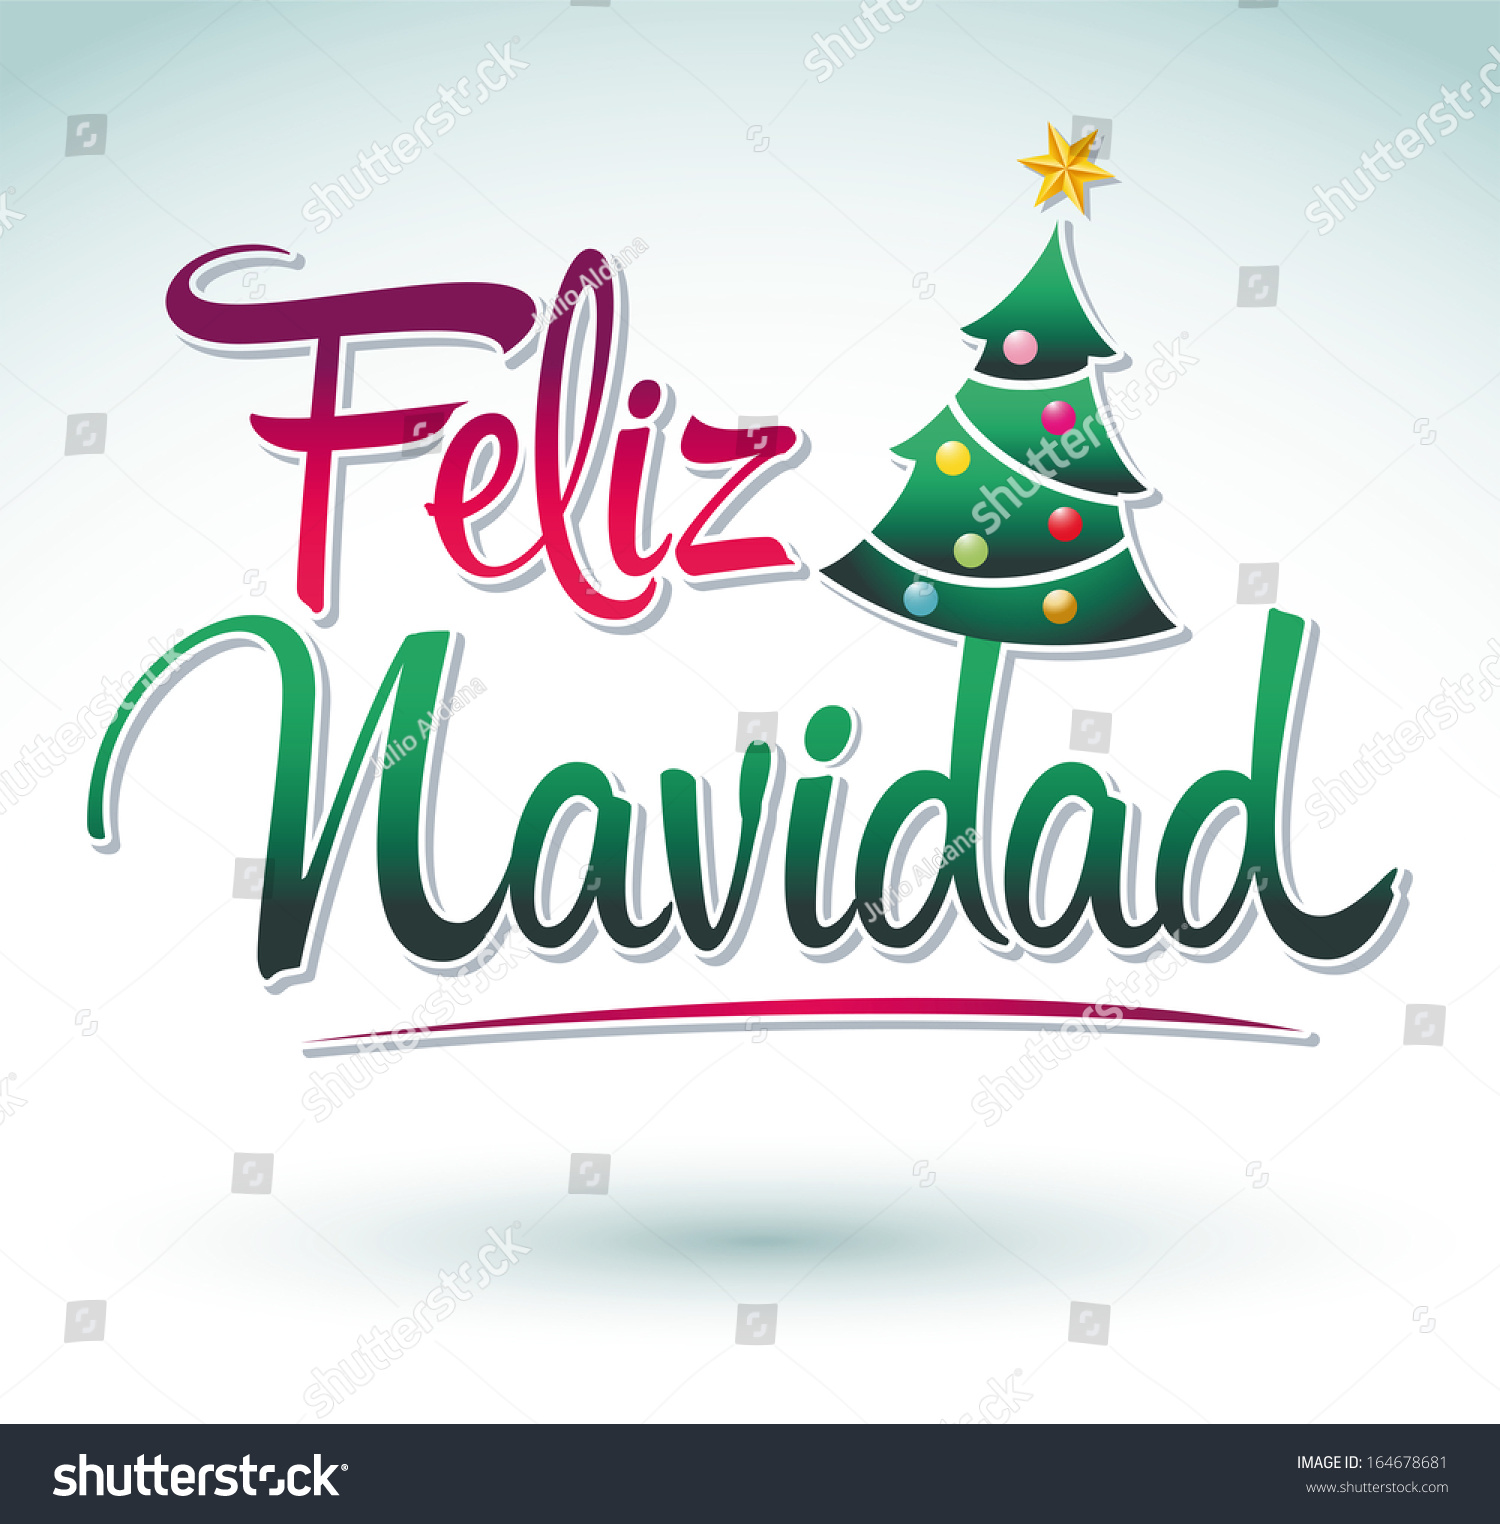 stock-vector-feliz-navidad-merry-christmas-spanish-text-vector-christmas-tree-164678681.jpg